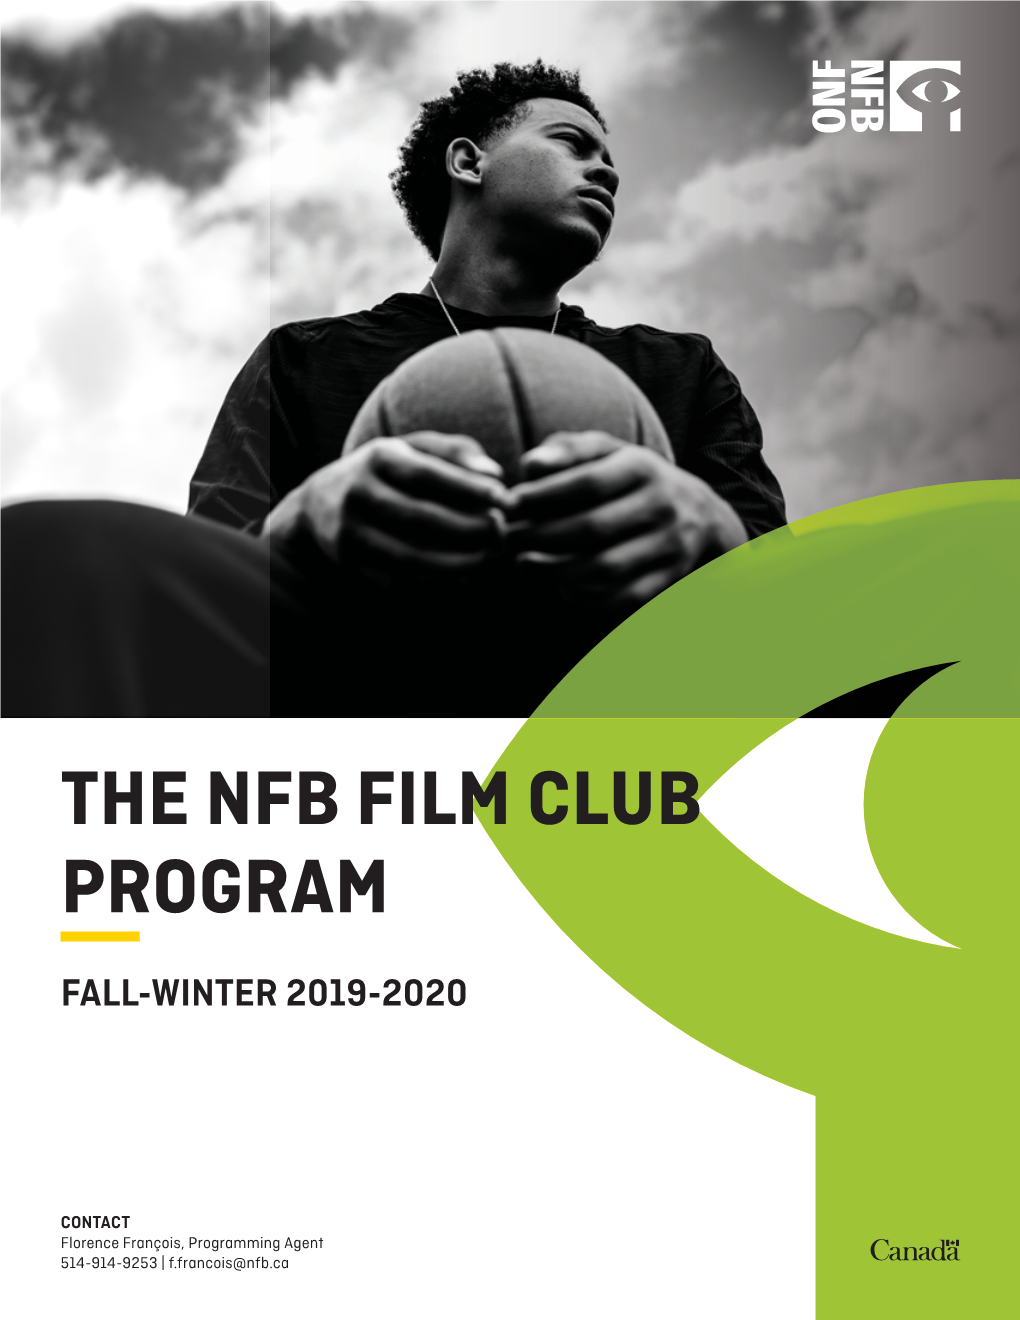 The Nfb Film Club Program